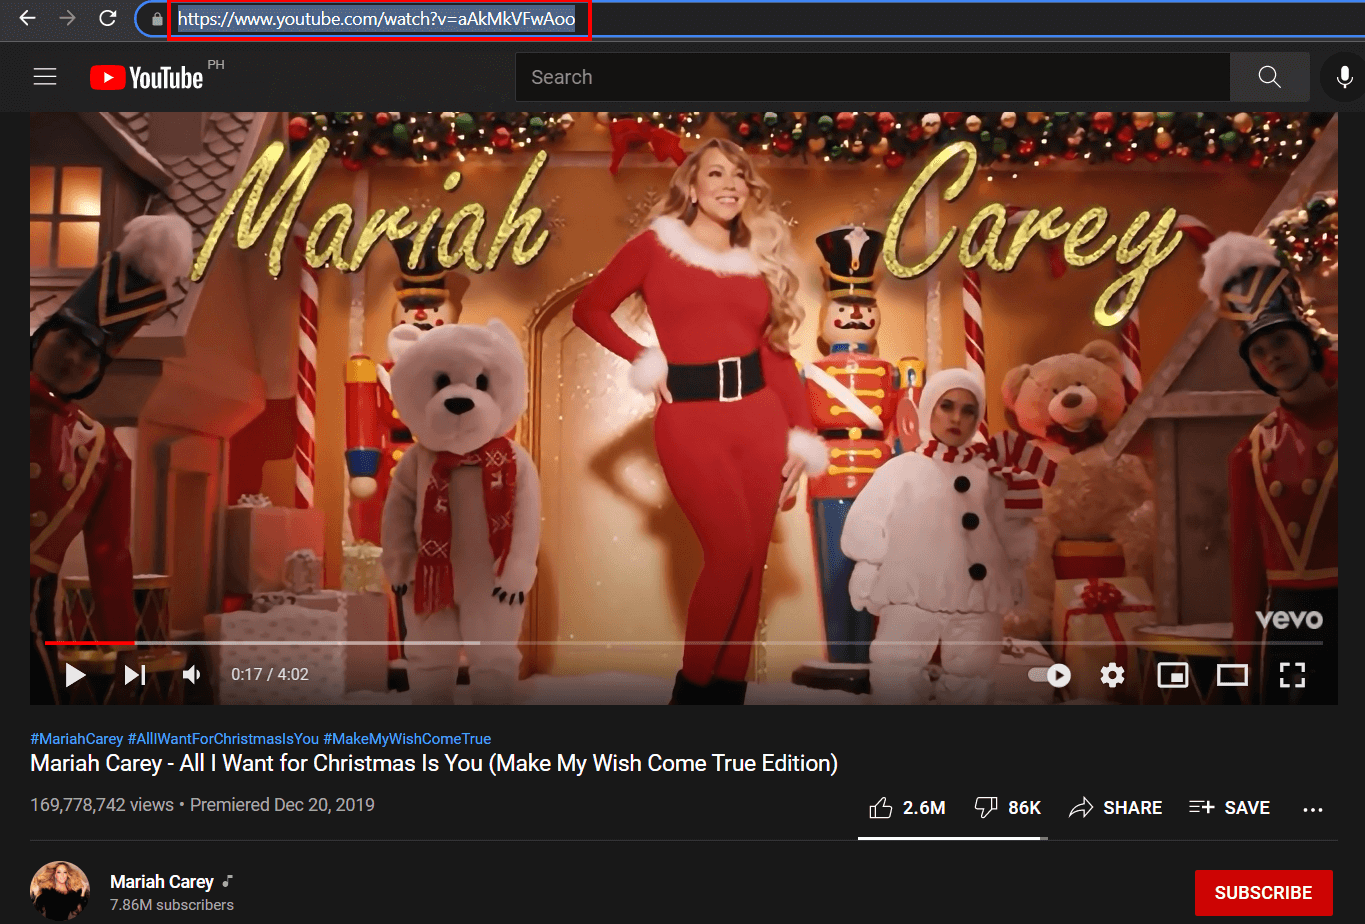 mariah carey Christmas music, youtube, download music